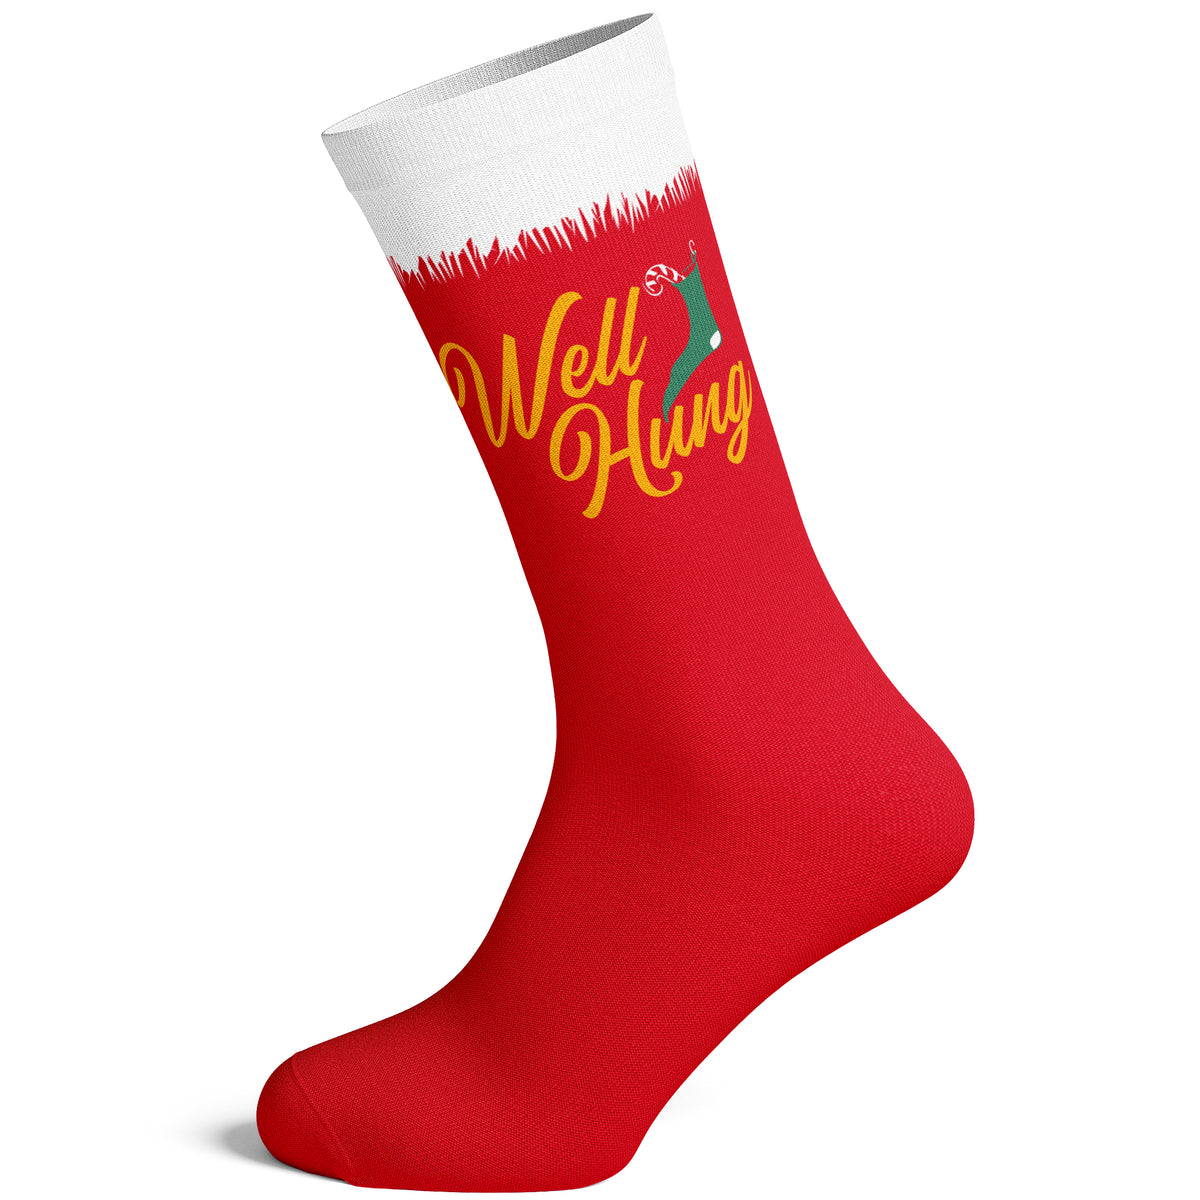 Funny Christmas Stockings Well Hung Joke Graphic by RamblingBoho · Creative  Fabrica